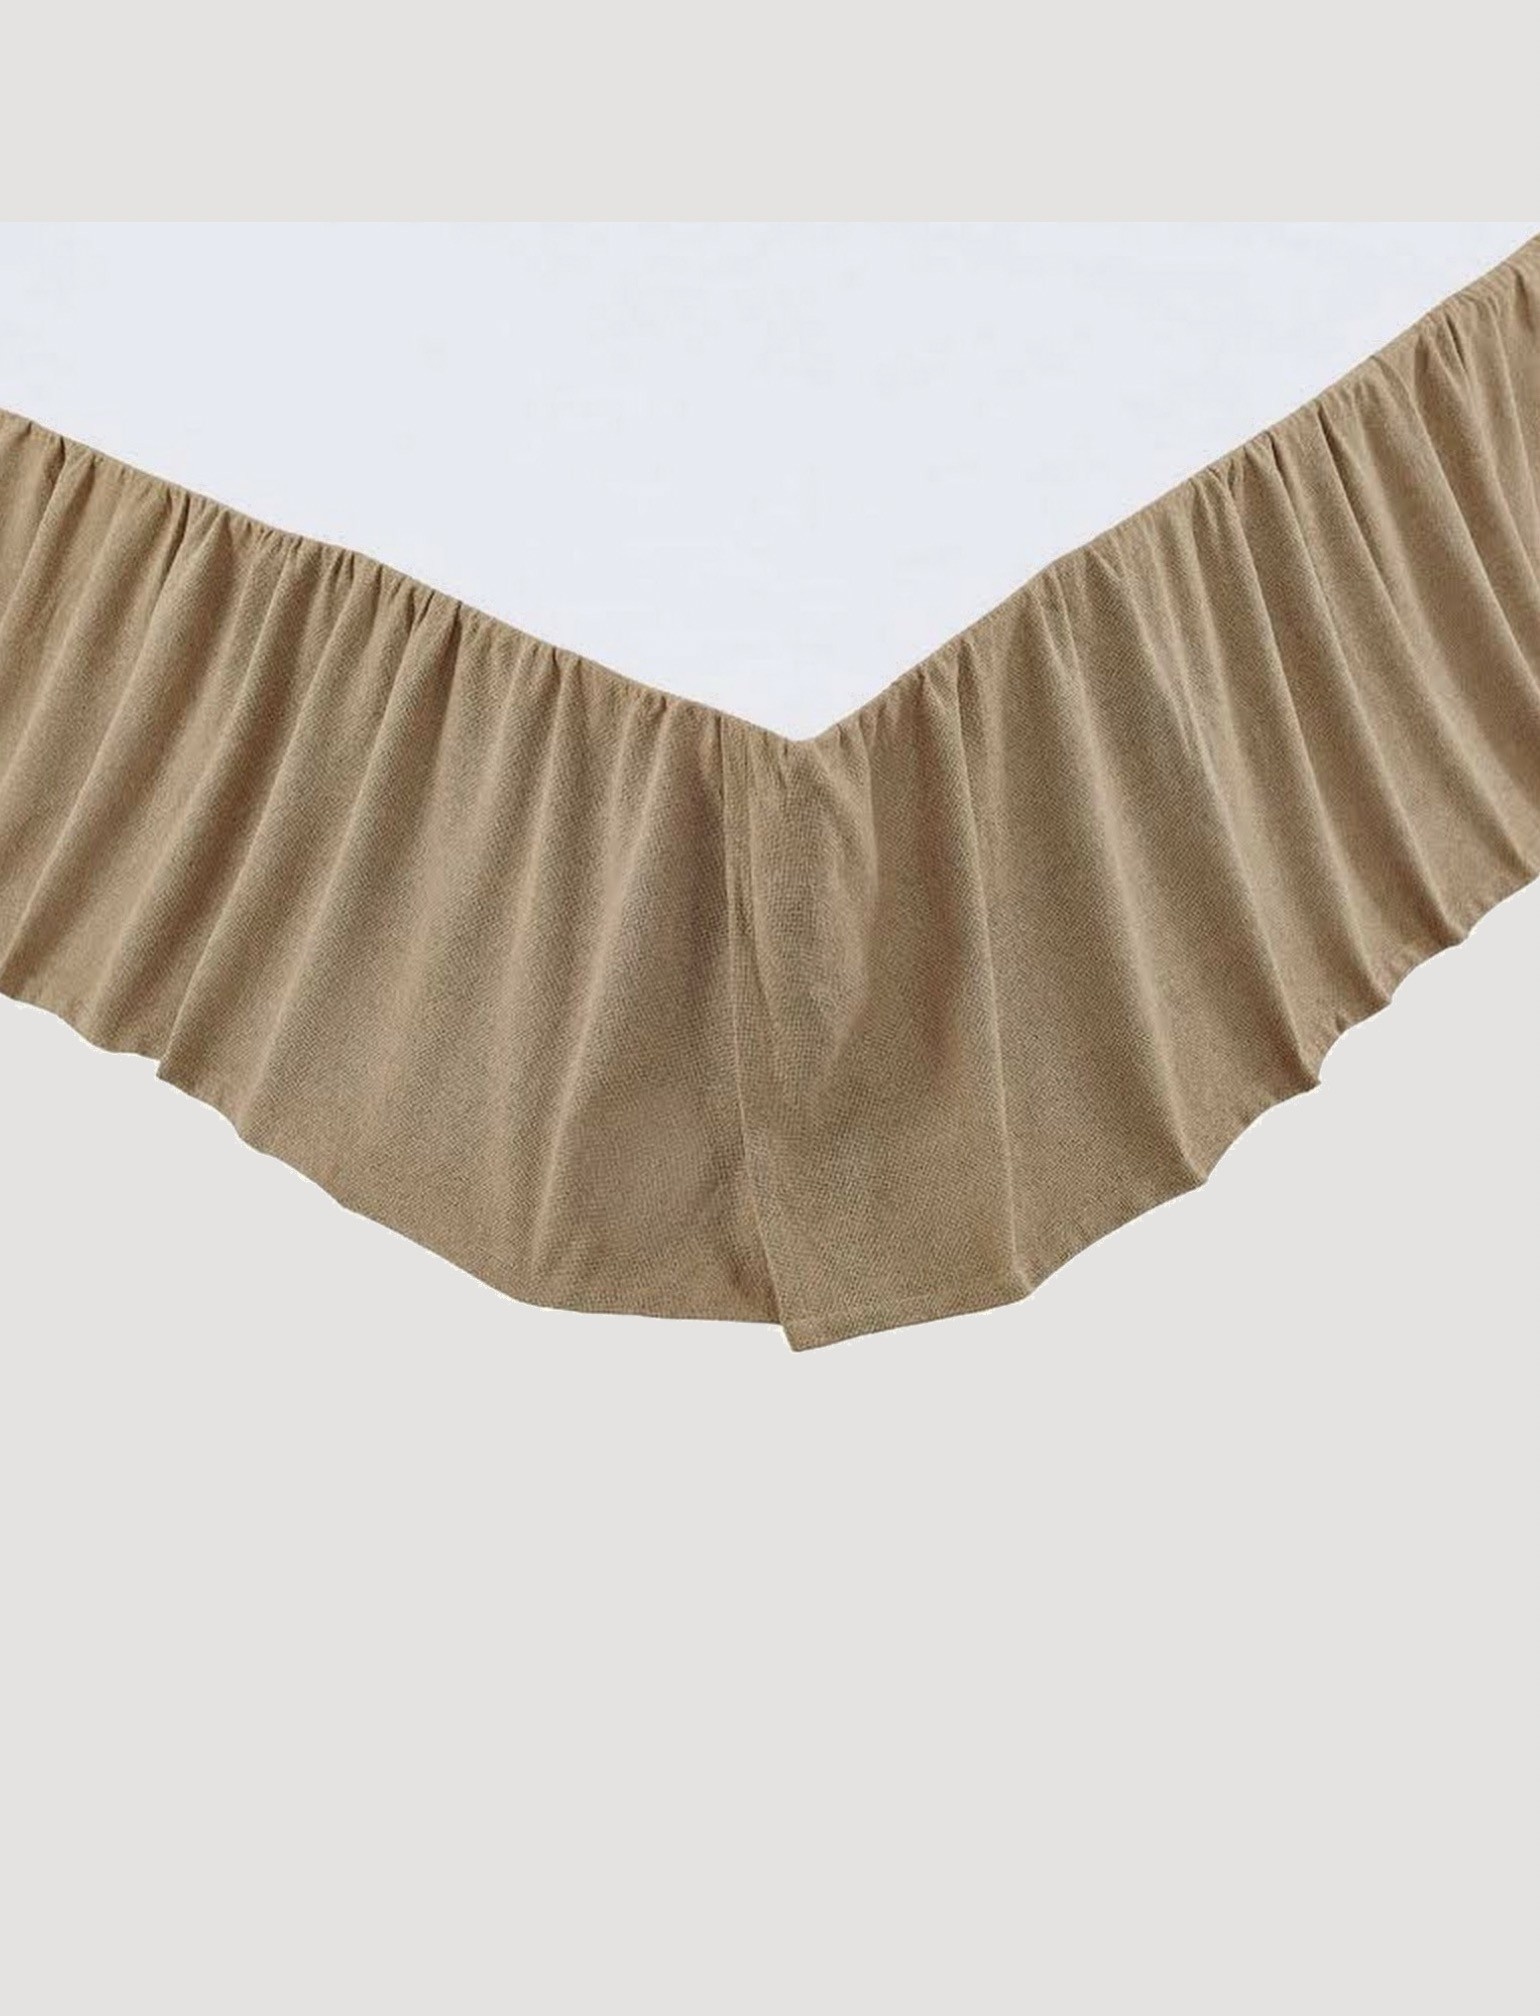 VHC Brands Burlap Natural Ruffled Fringe Bed Skirt